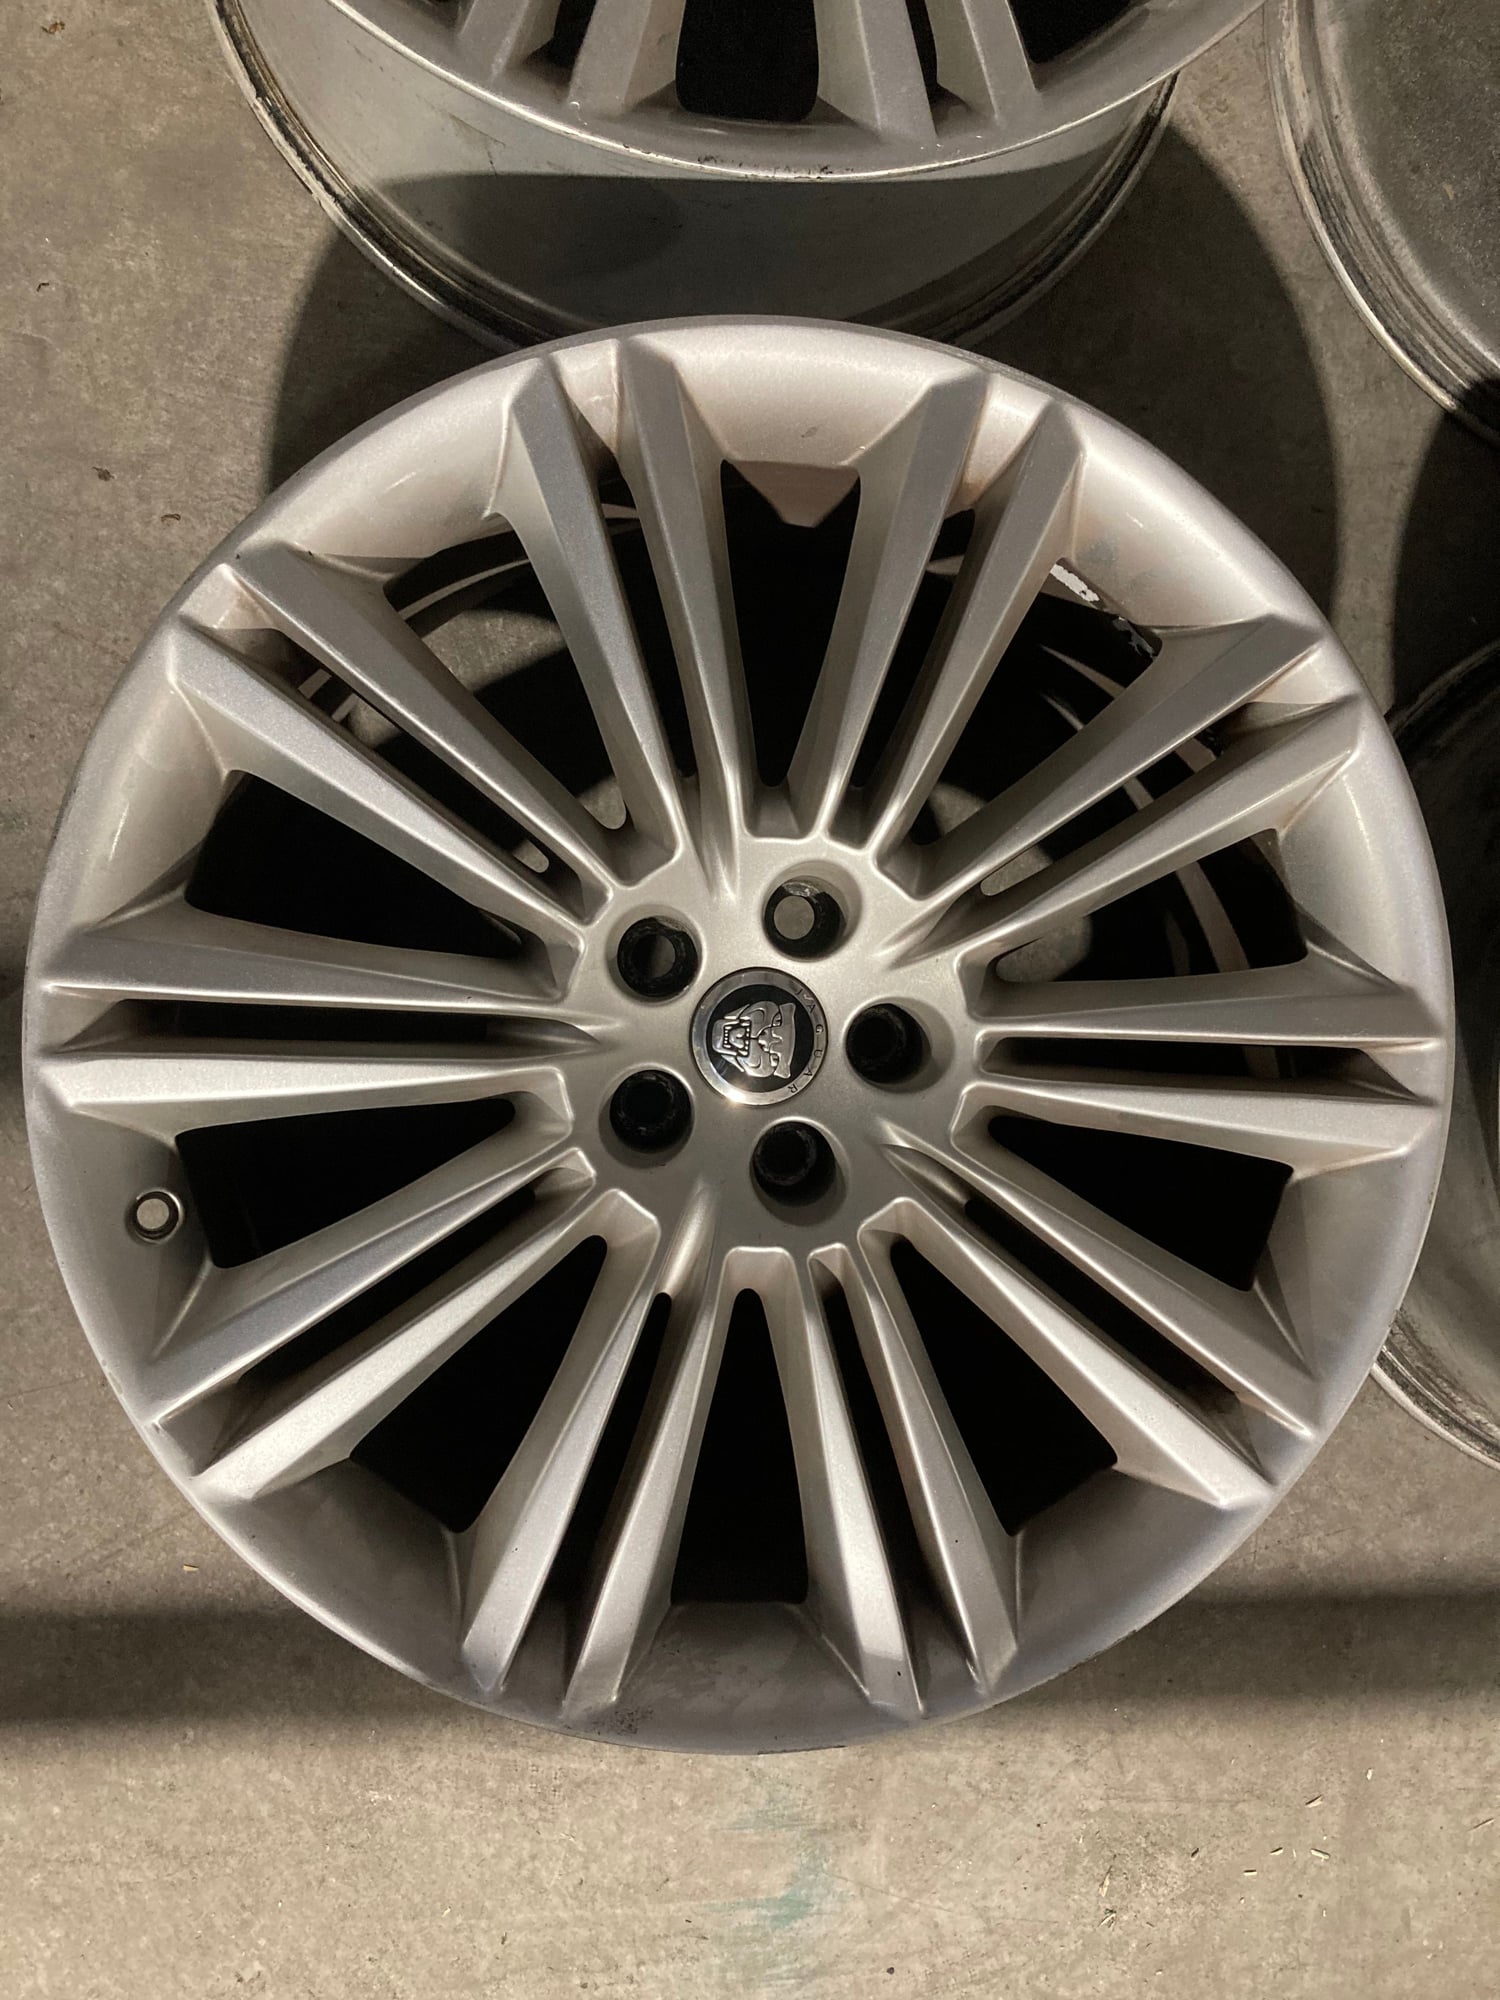 Wheels and Tires/Axles - 20” Jaguar OEM Kasuga Wheels - Used - 0  All Models - Austin, TX 78719, United States